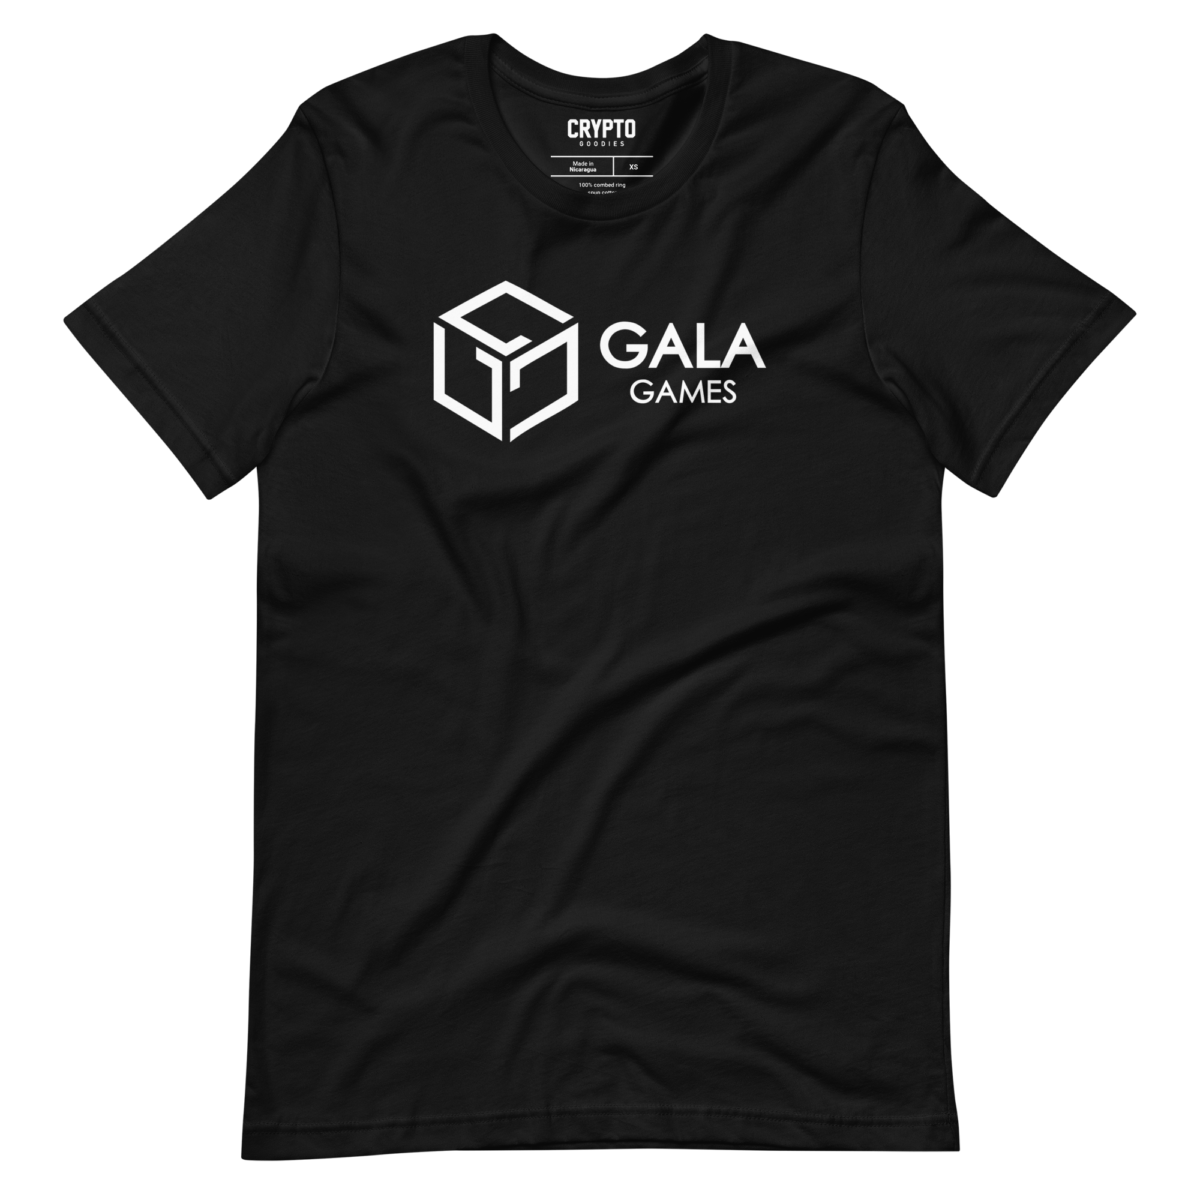 unisex staple t shirt black front 63698cd552f49 - Gala Games T-Shirt